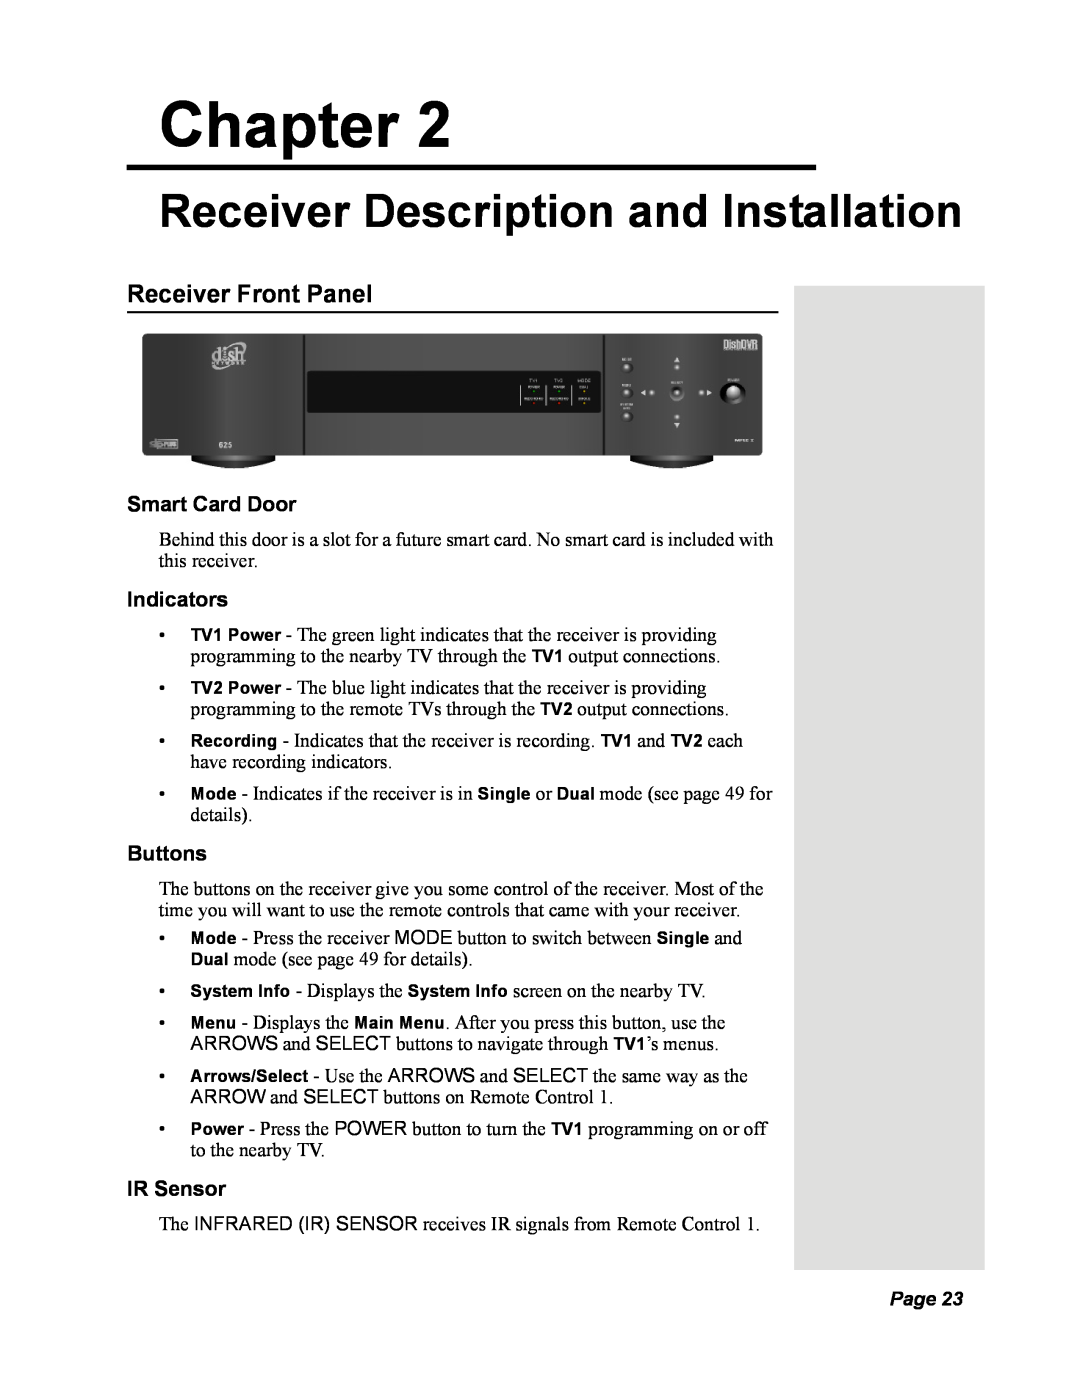 Dish Network DISH 625 manual Receiver Front Panel, Smart Card Door, Indicators, Buttons, IR Sensor, Page, Chapter 